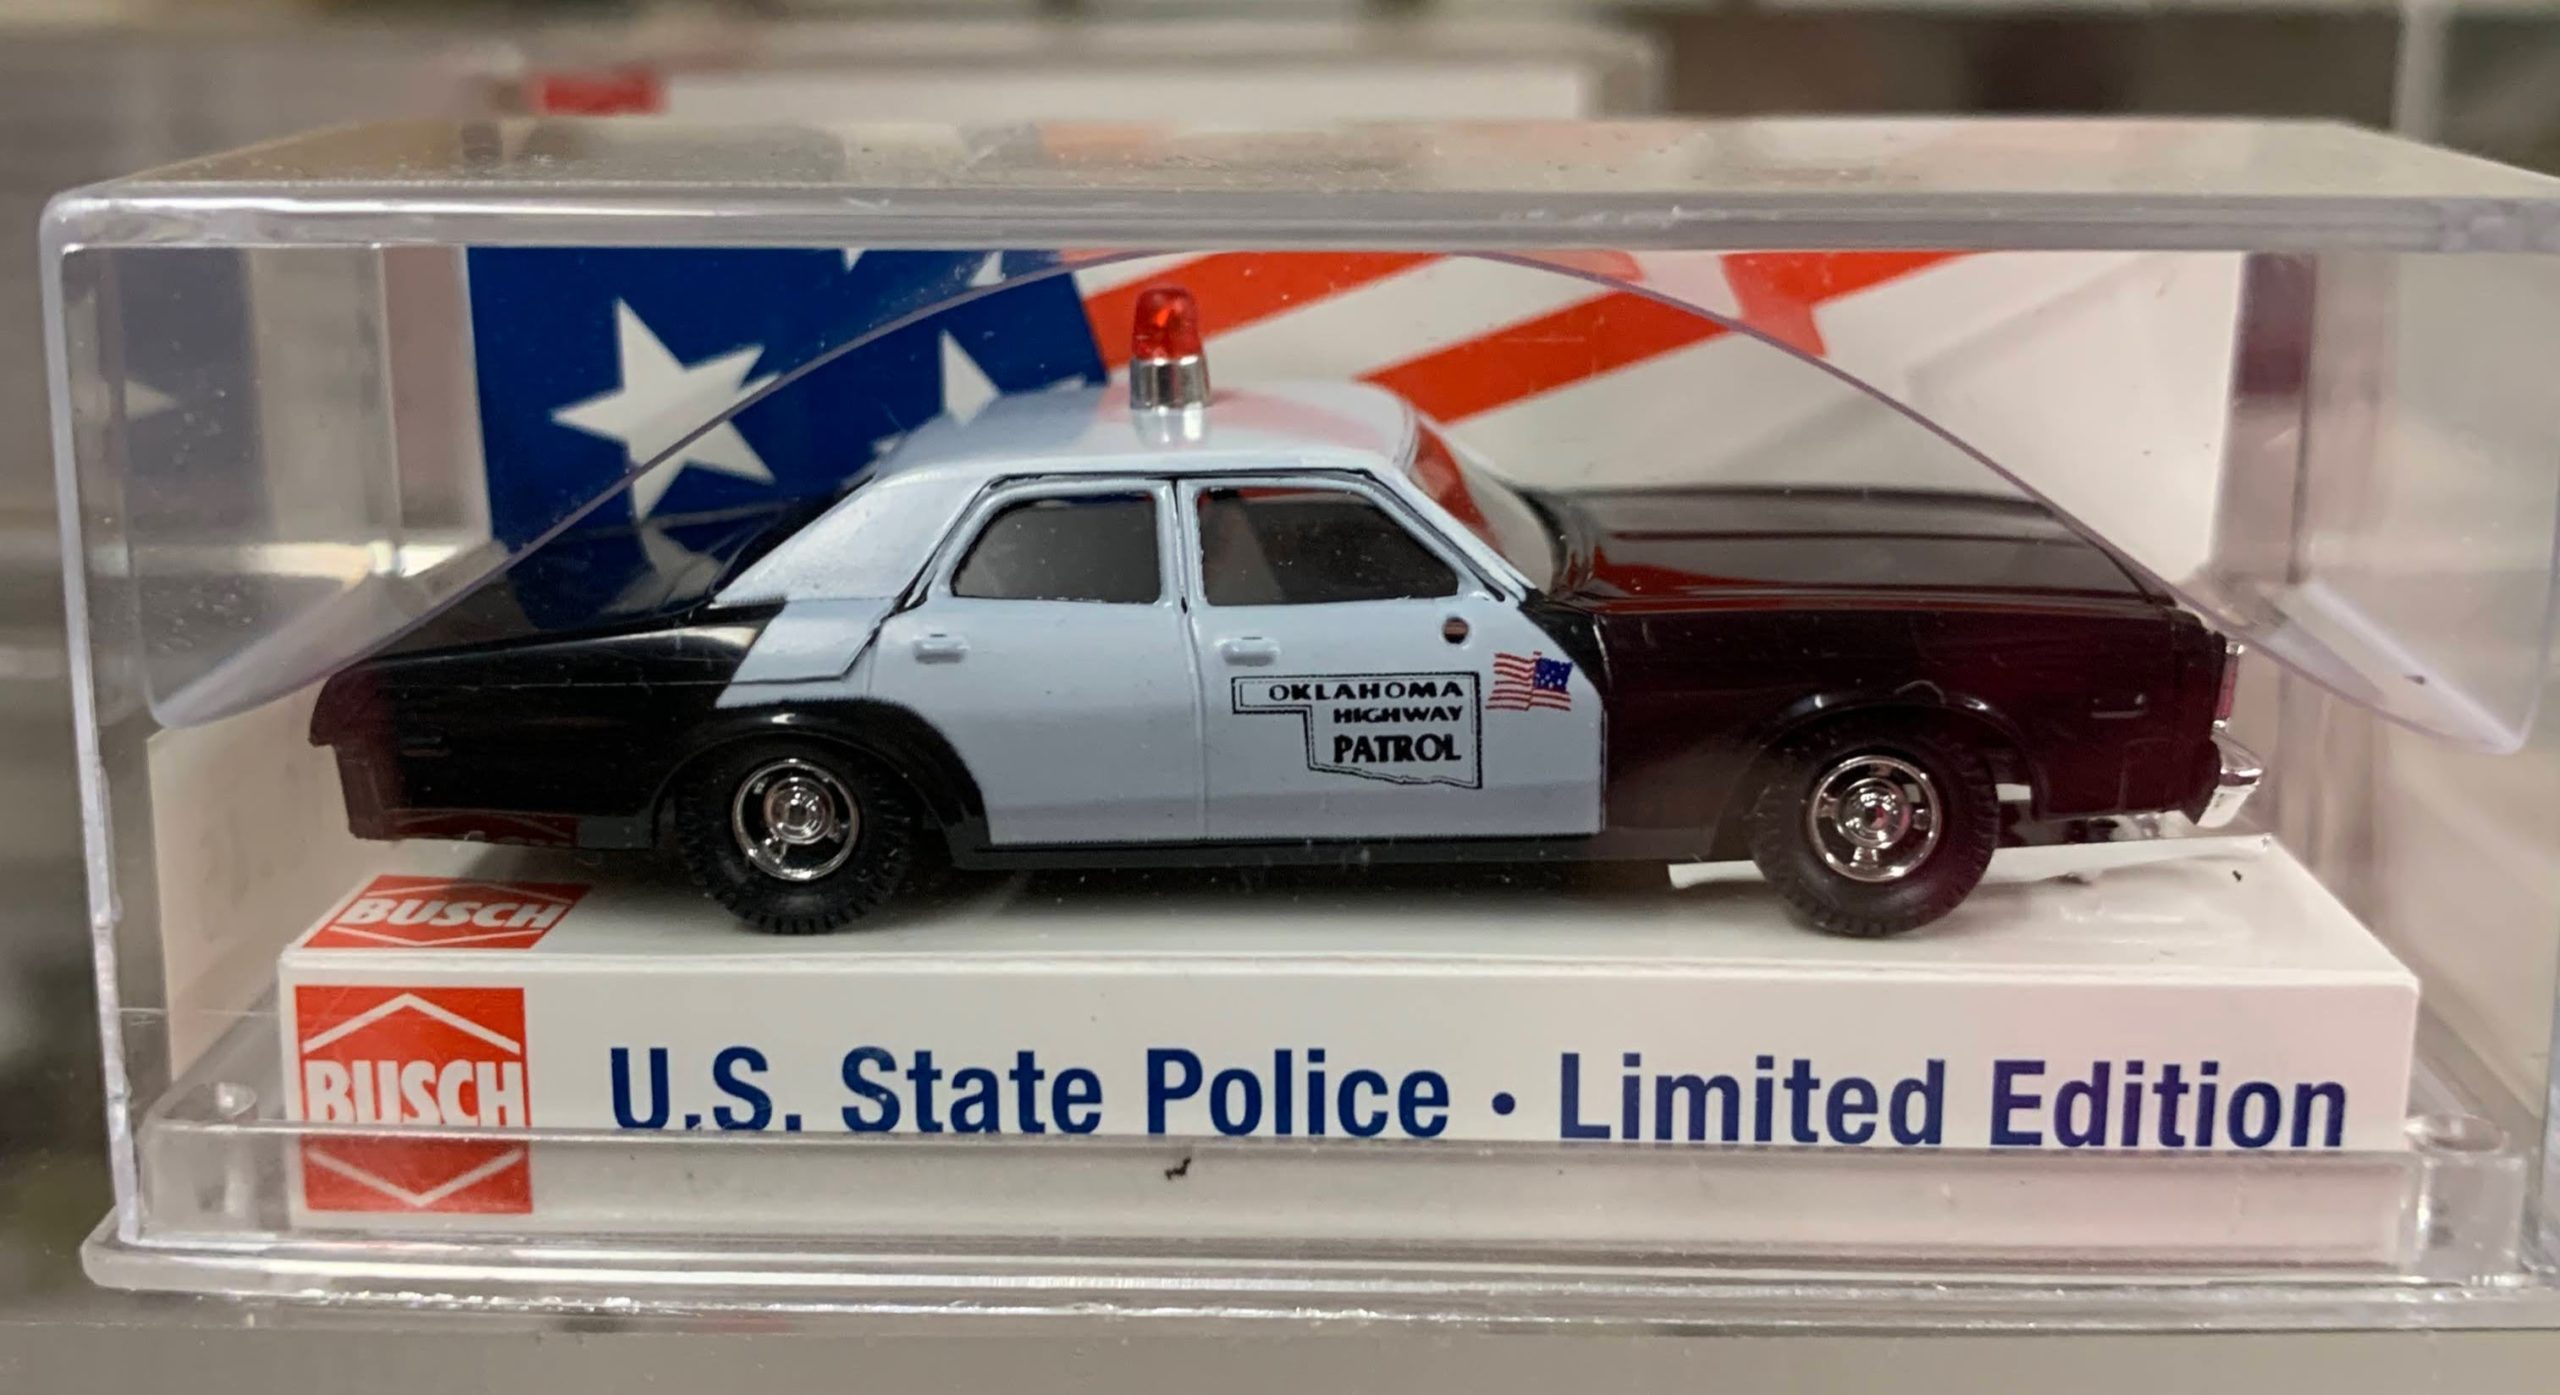 U.S. State Police Series - Oklahoma